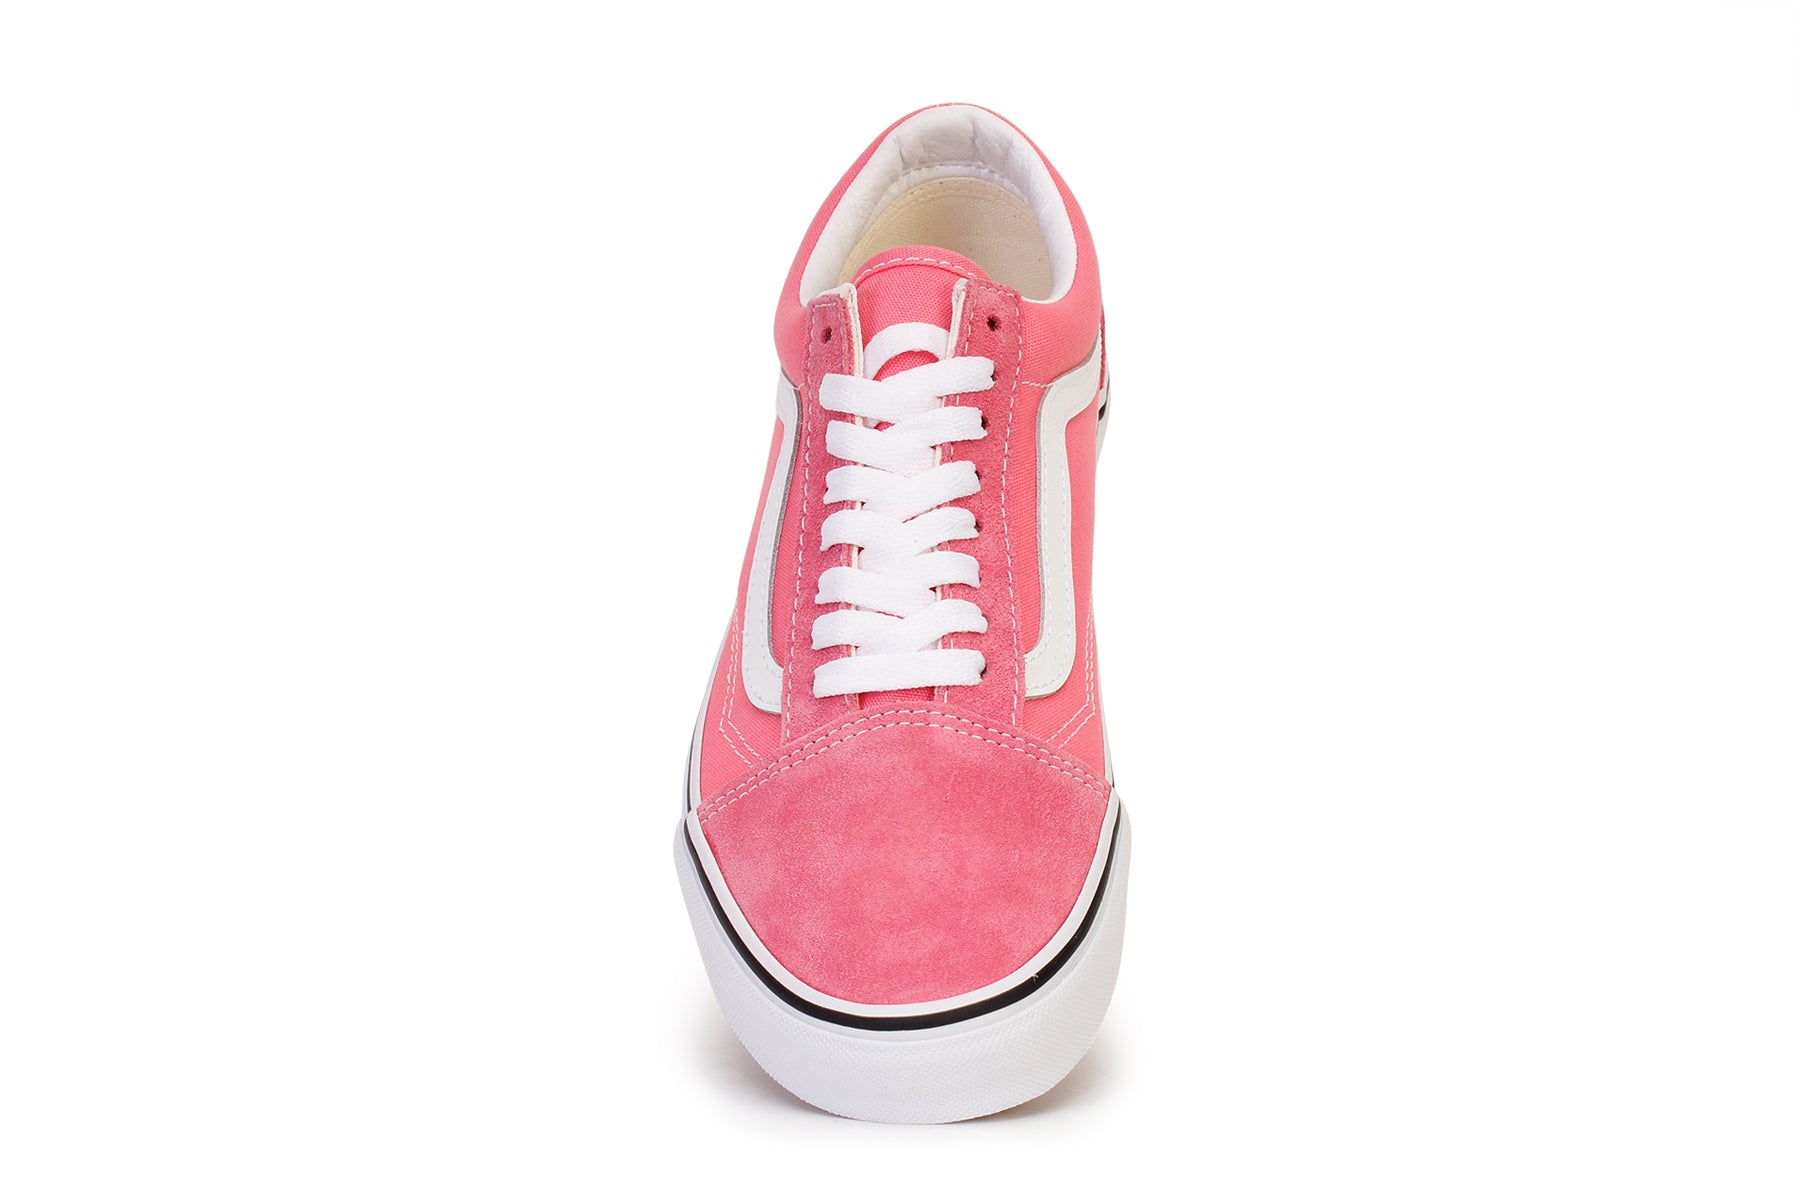 VANS Shoes Womens 7.5 Old Skool Sneakers Pink Canvas Low Top Casual Skater